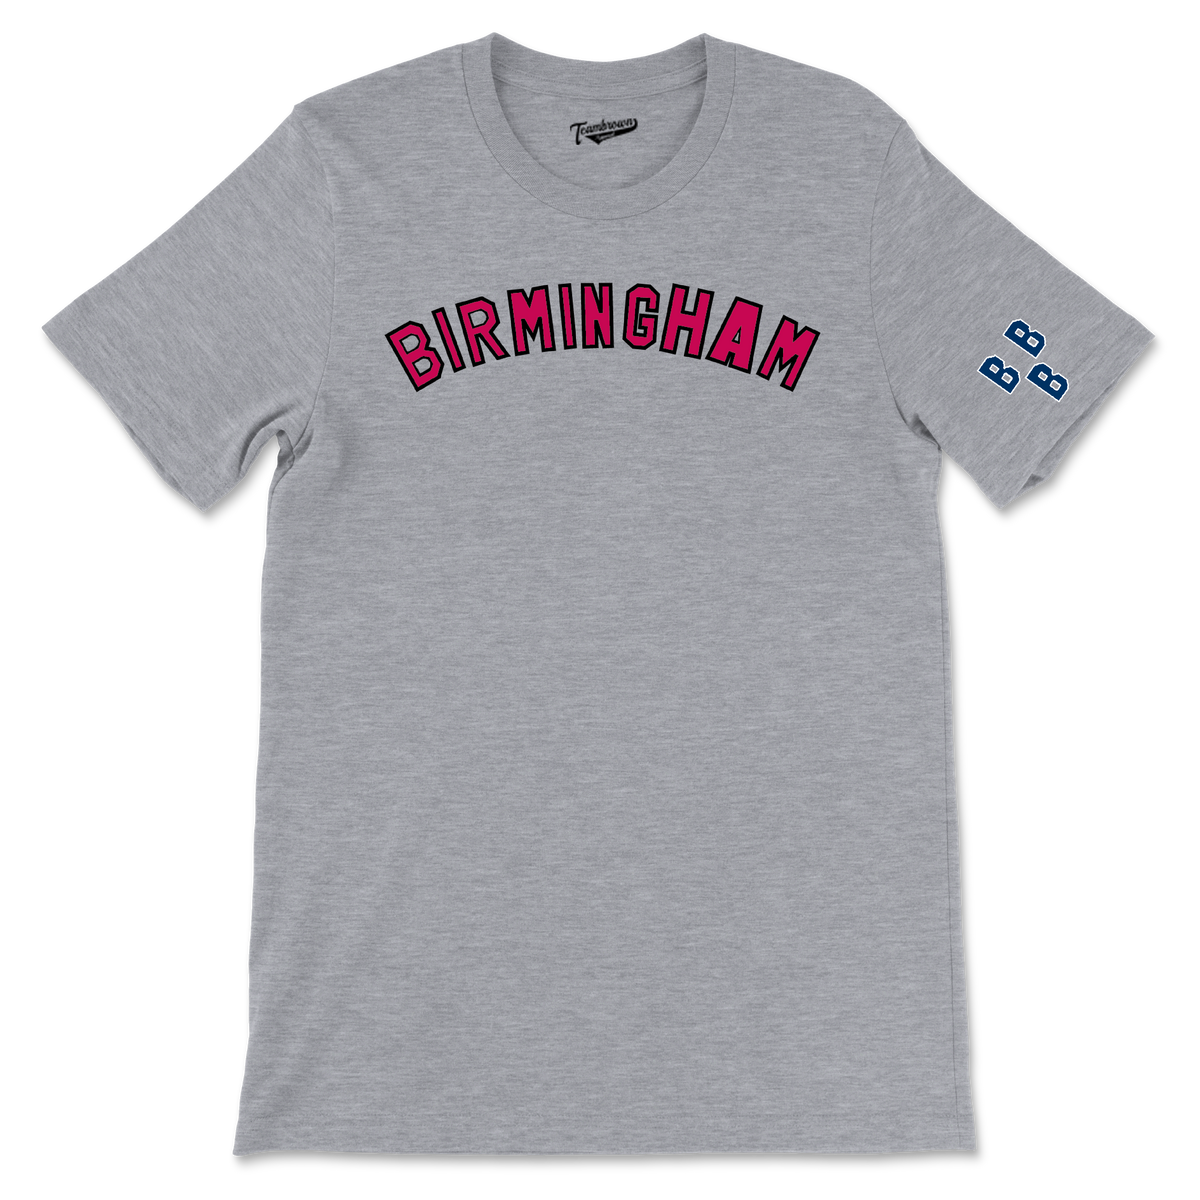 Birmingham Black Barons Uniform - Unisex T-Shirt | Officially Licensed - NLBM